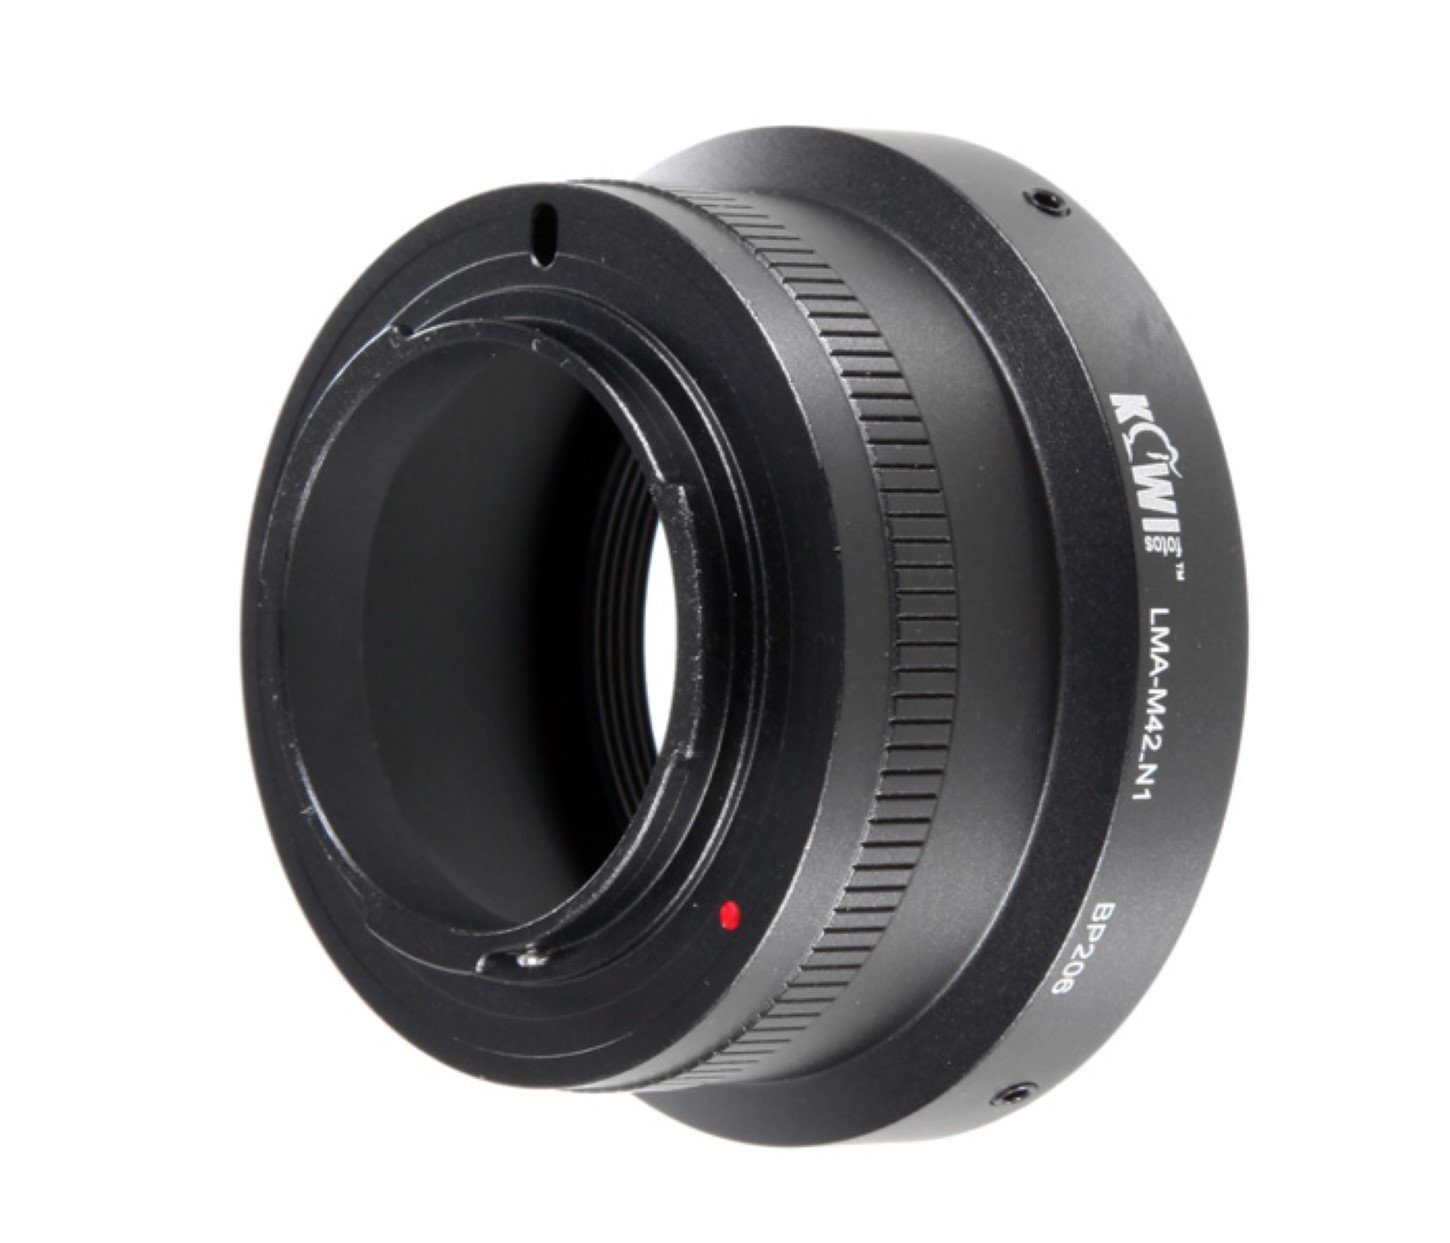 Guter Preis ayex Objektivadapter für M42 Objektive an Nikon Kameras Objektiveadapter 1